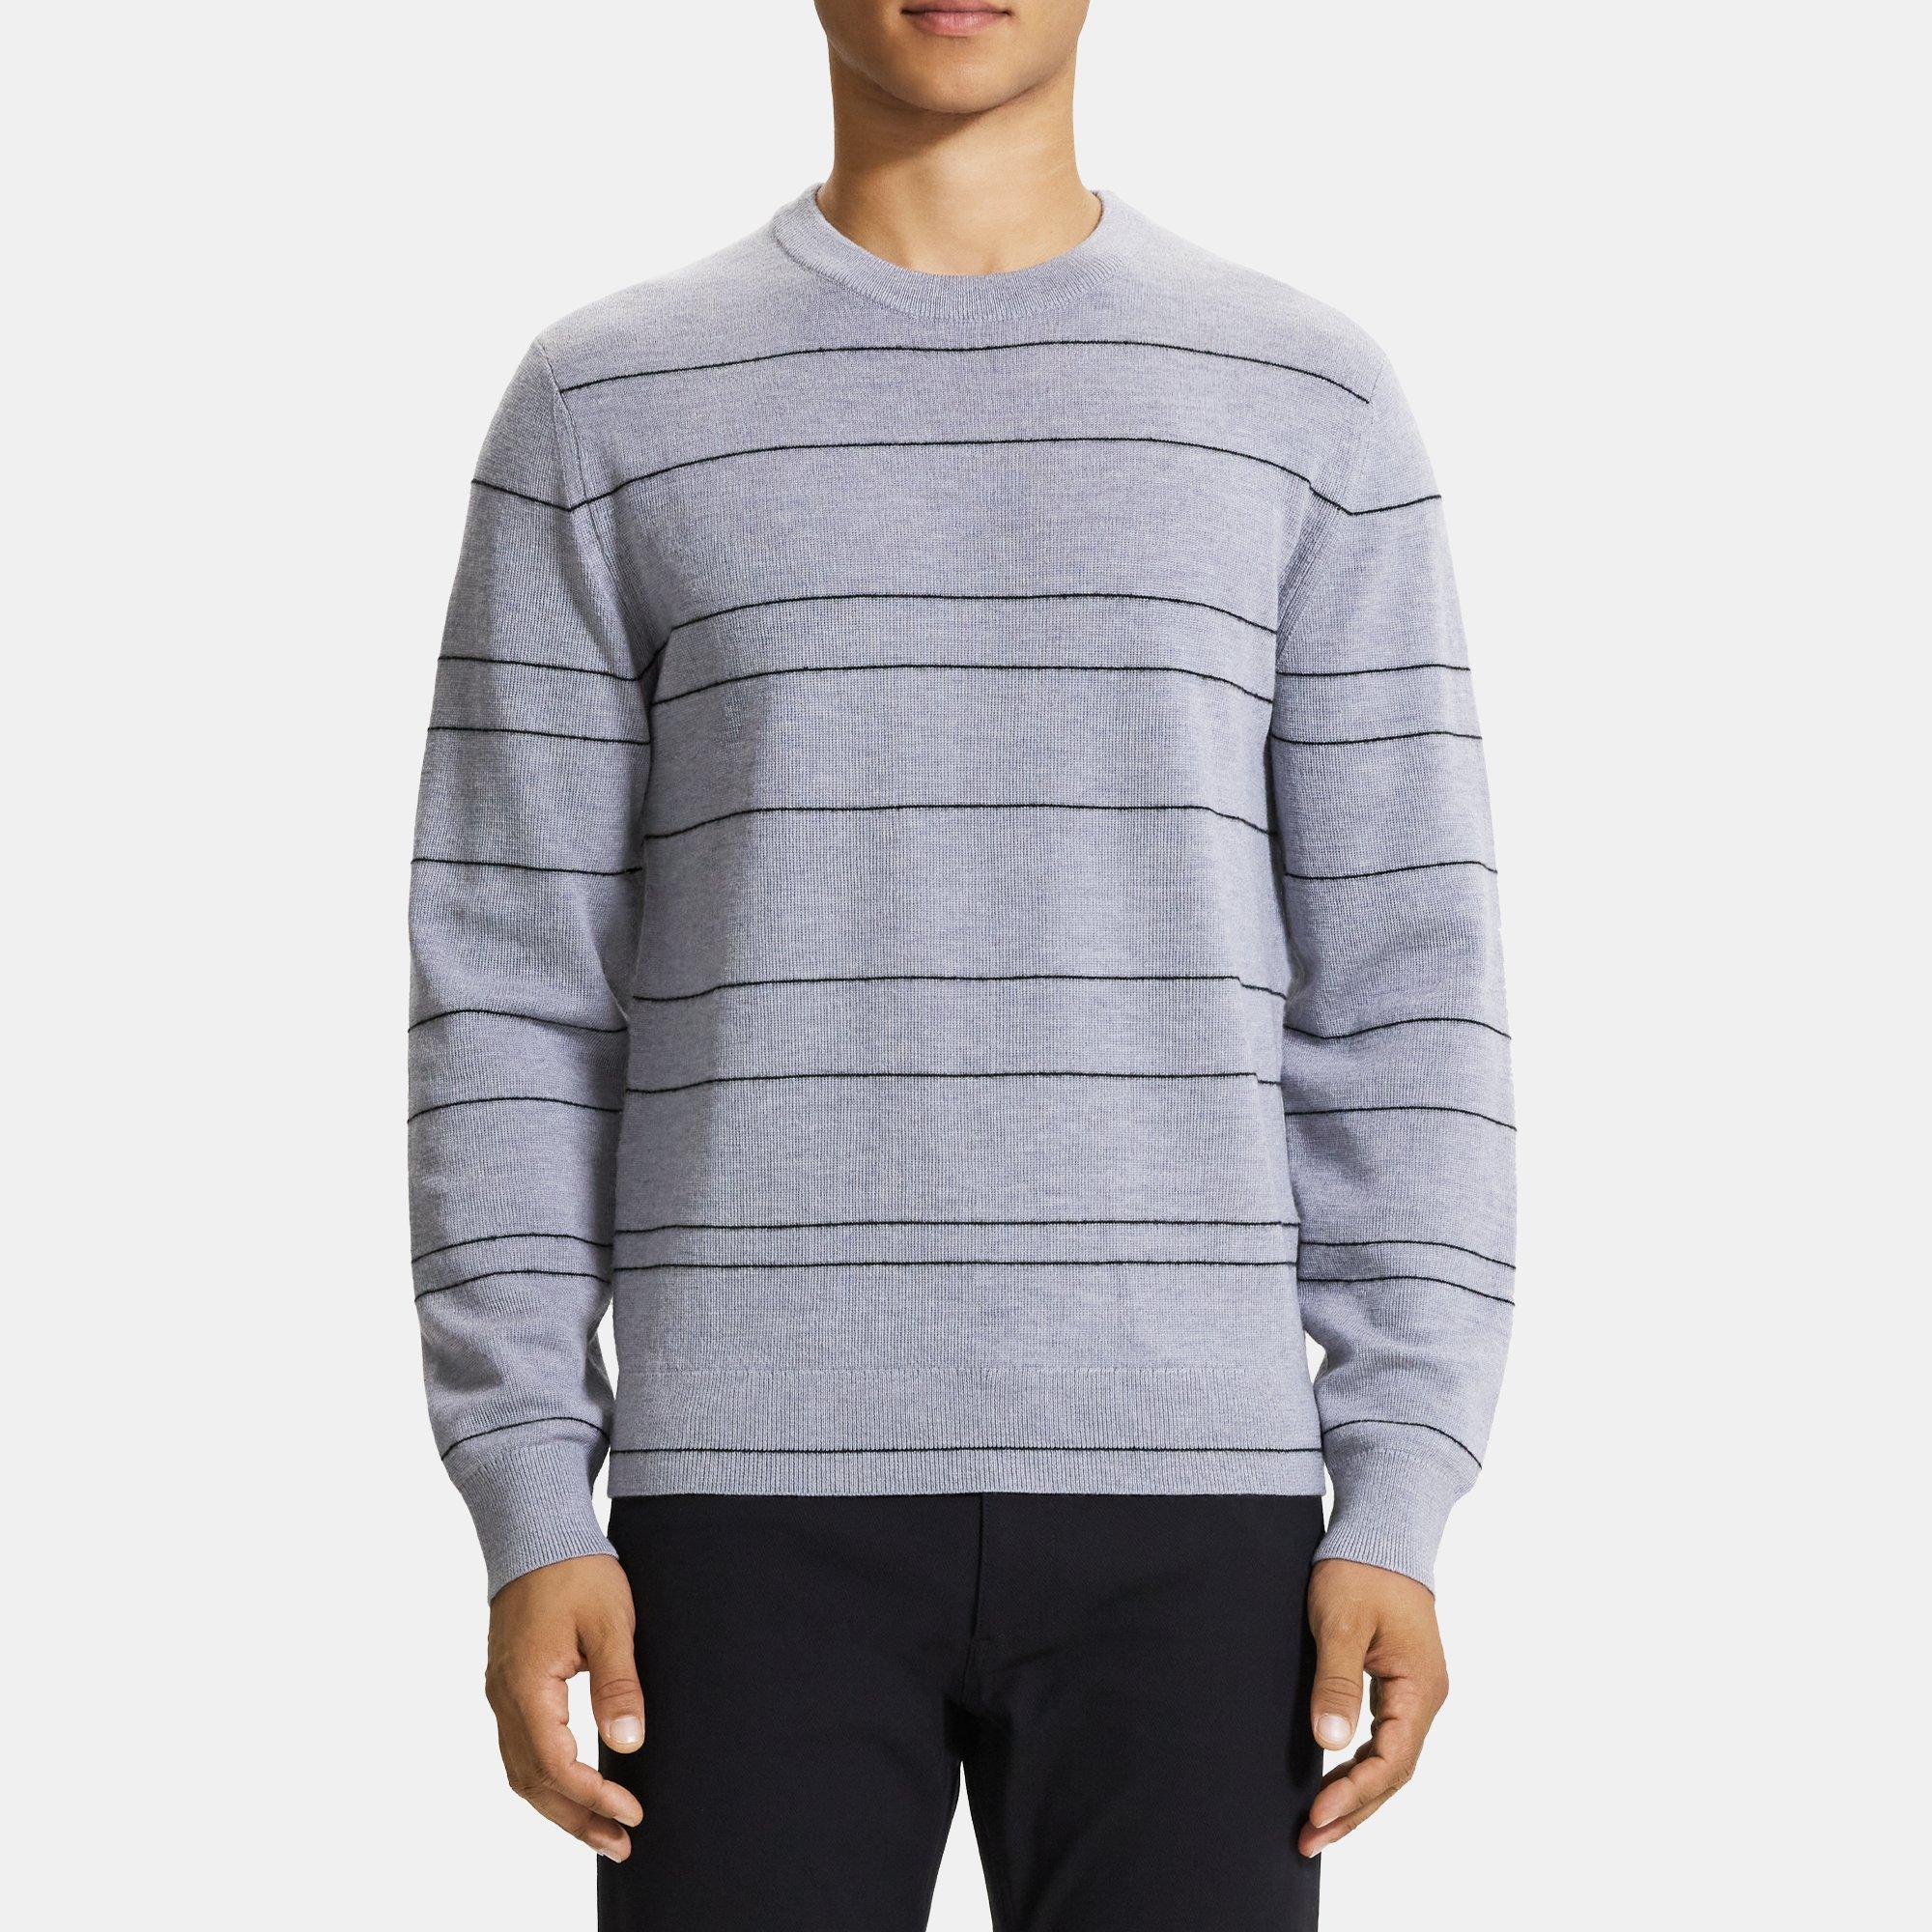 Theory Striped Sweater in Merino Wool